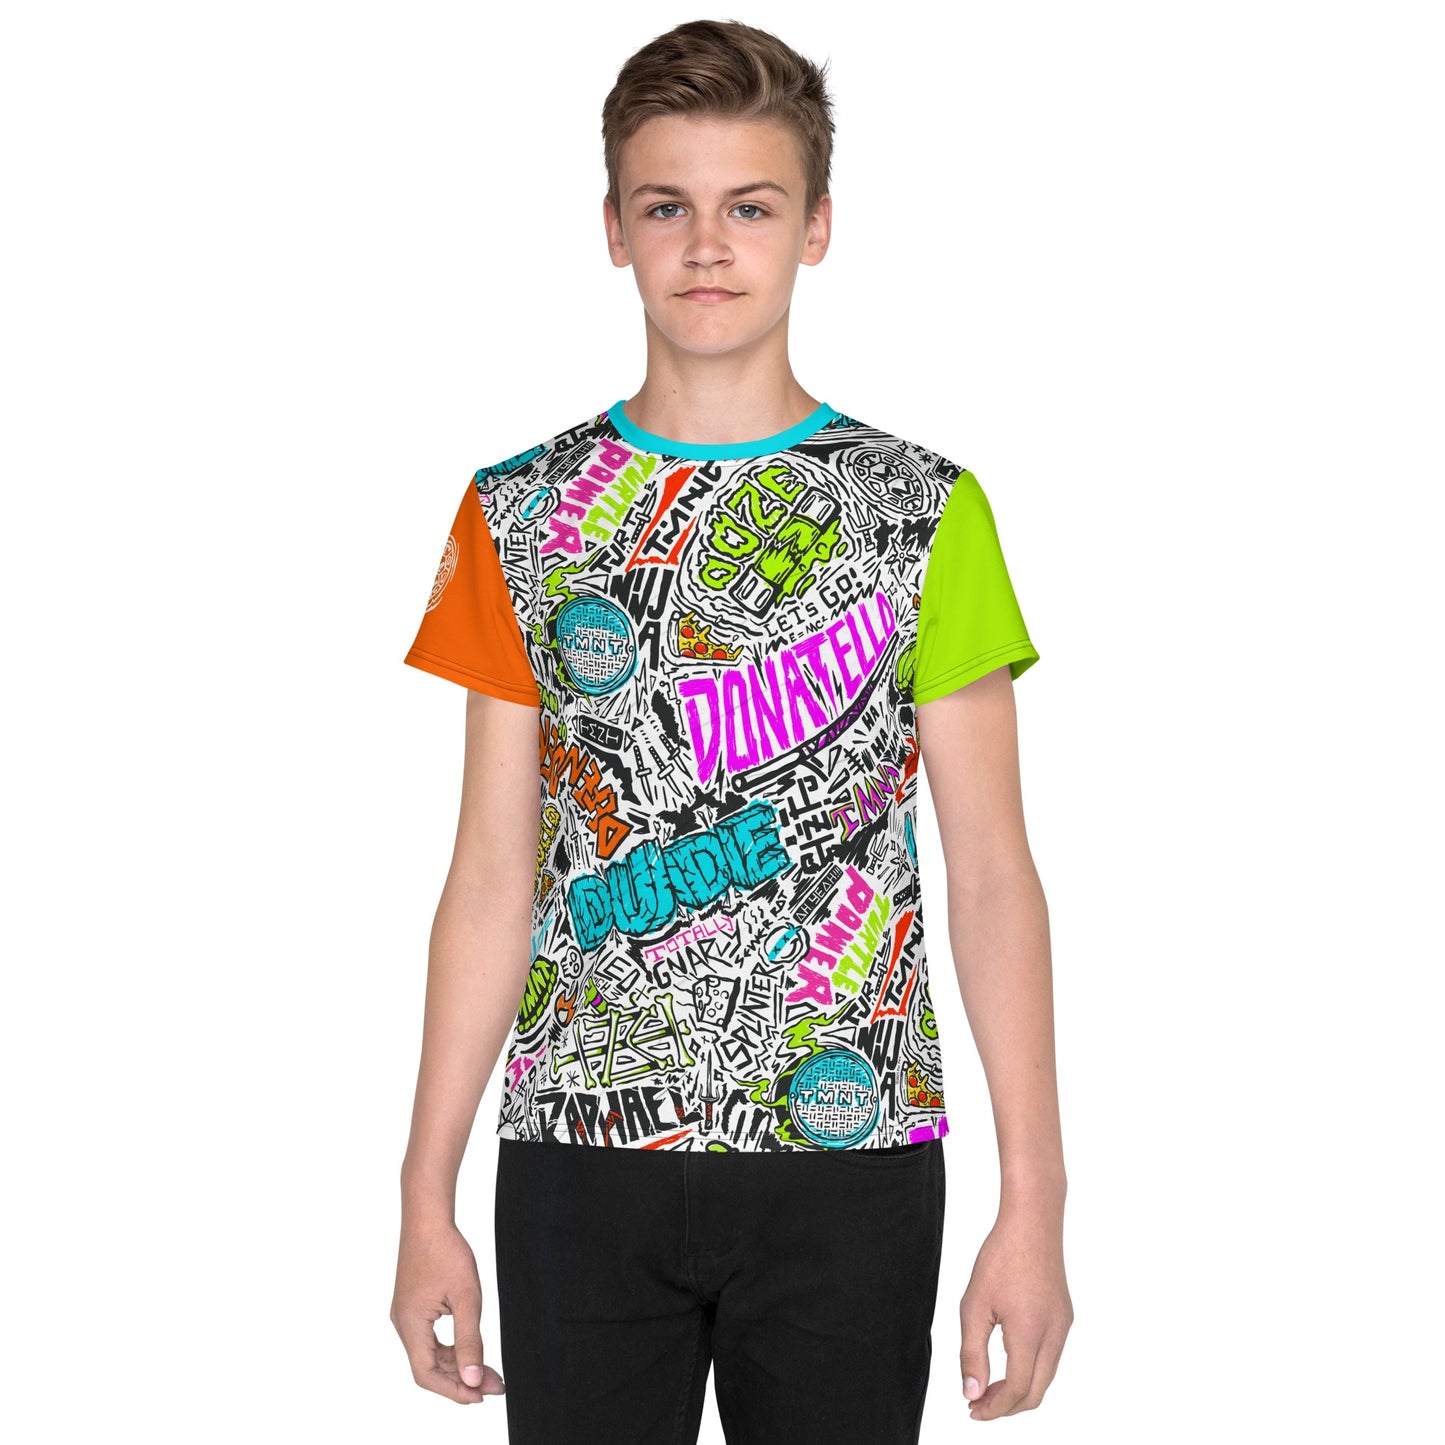 Teenage Mutant Ninja Turtles: Mutant Mayhem Name Sketches Kids T-Shirt